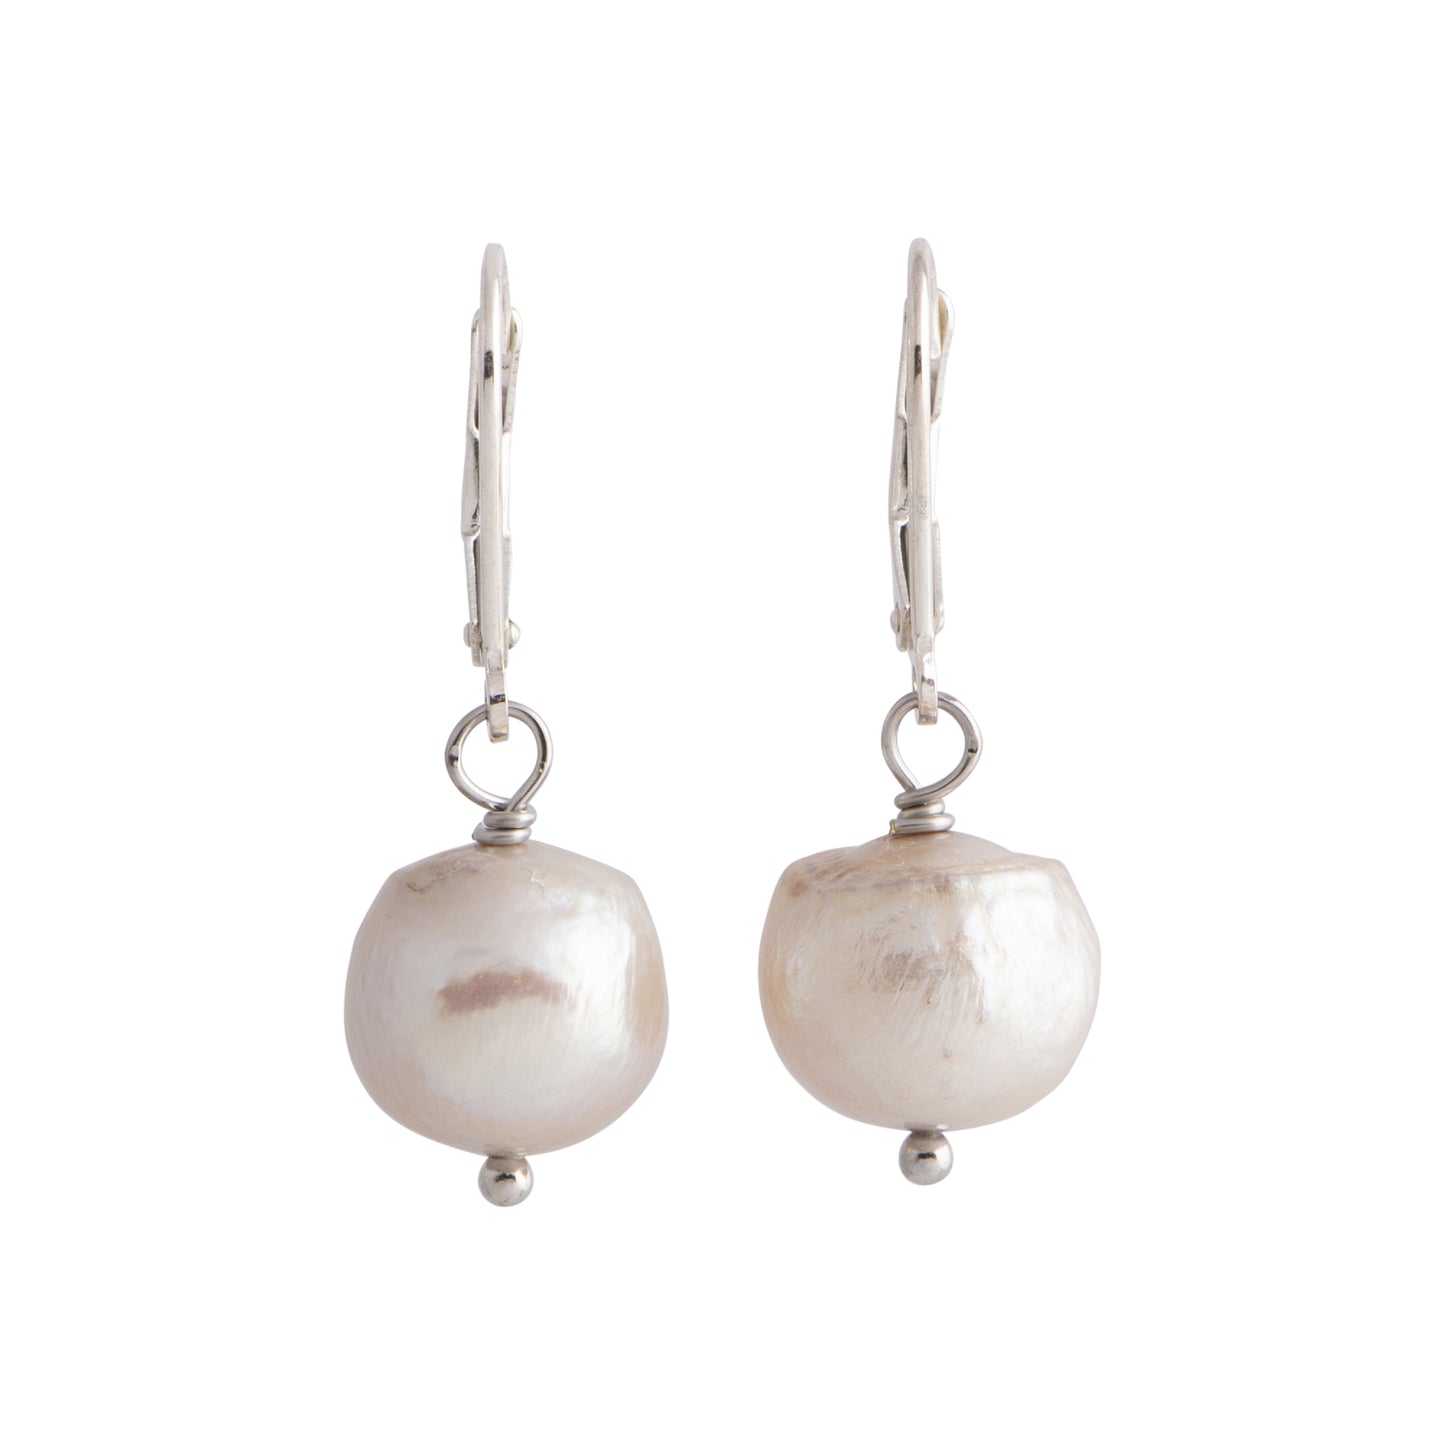 Oceana - Silver-tone pearl hinged earrings (Champagne pearls)